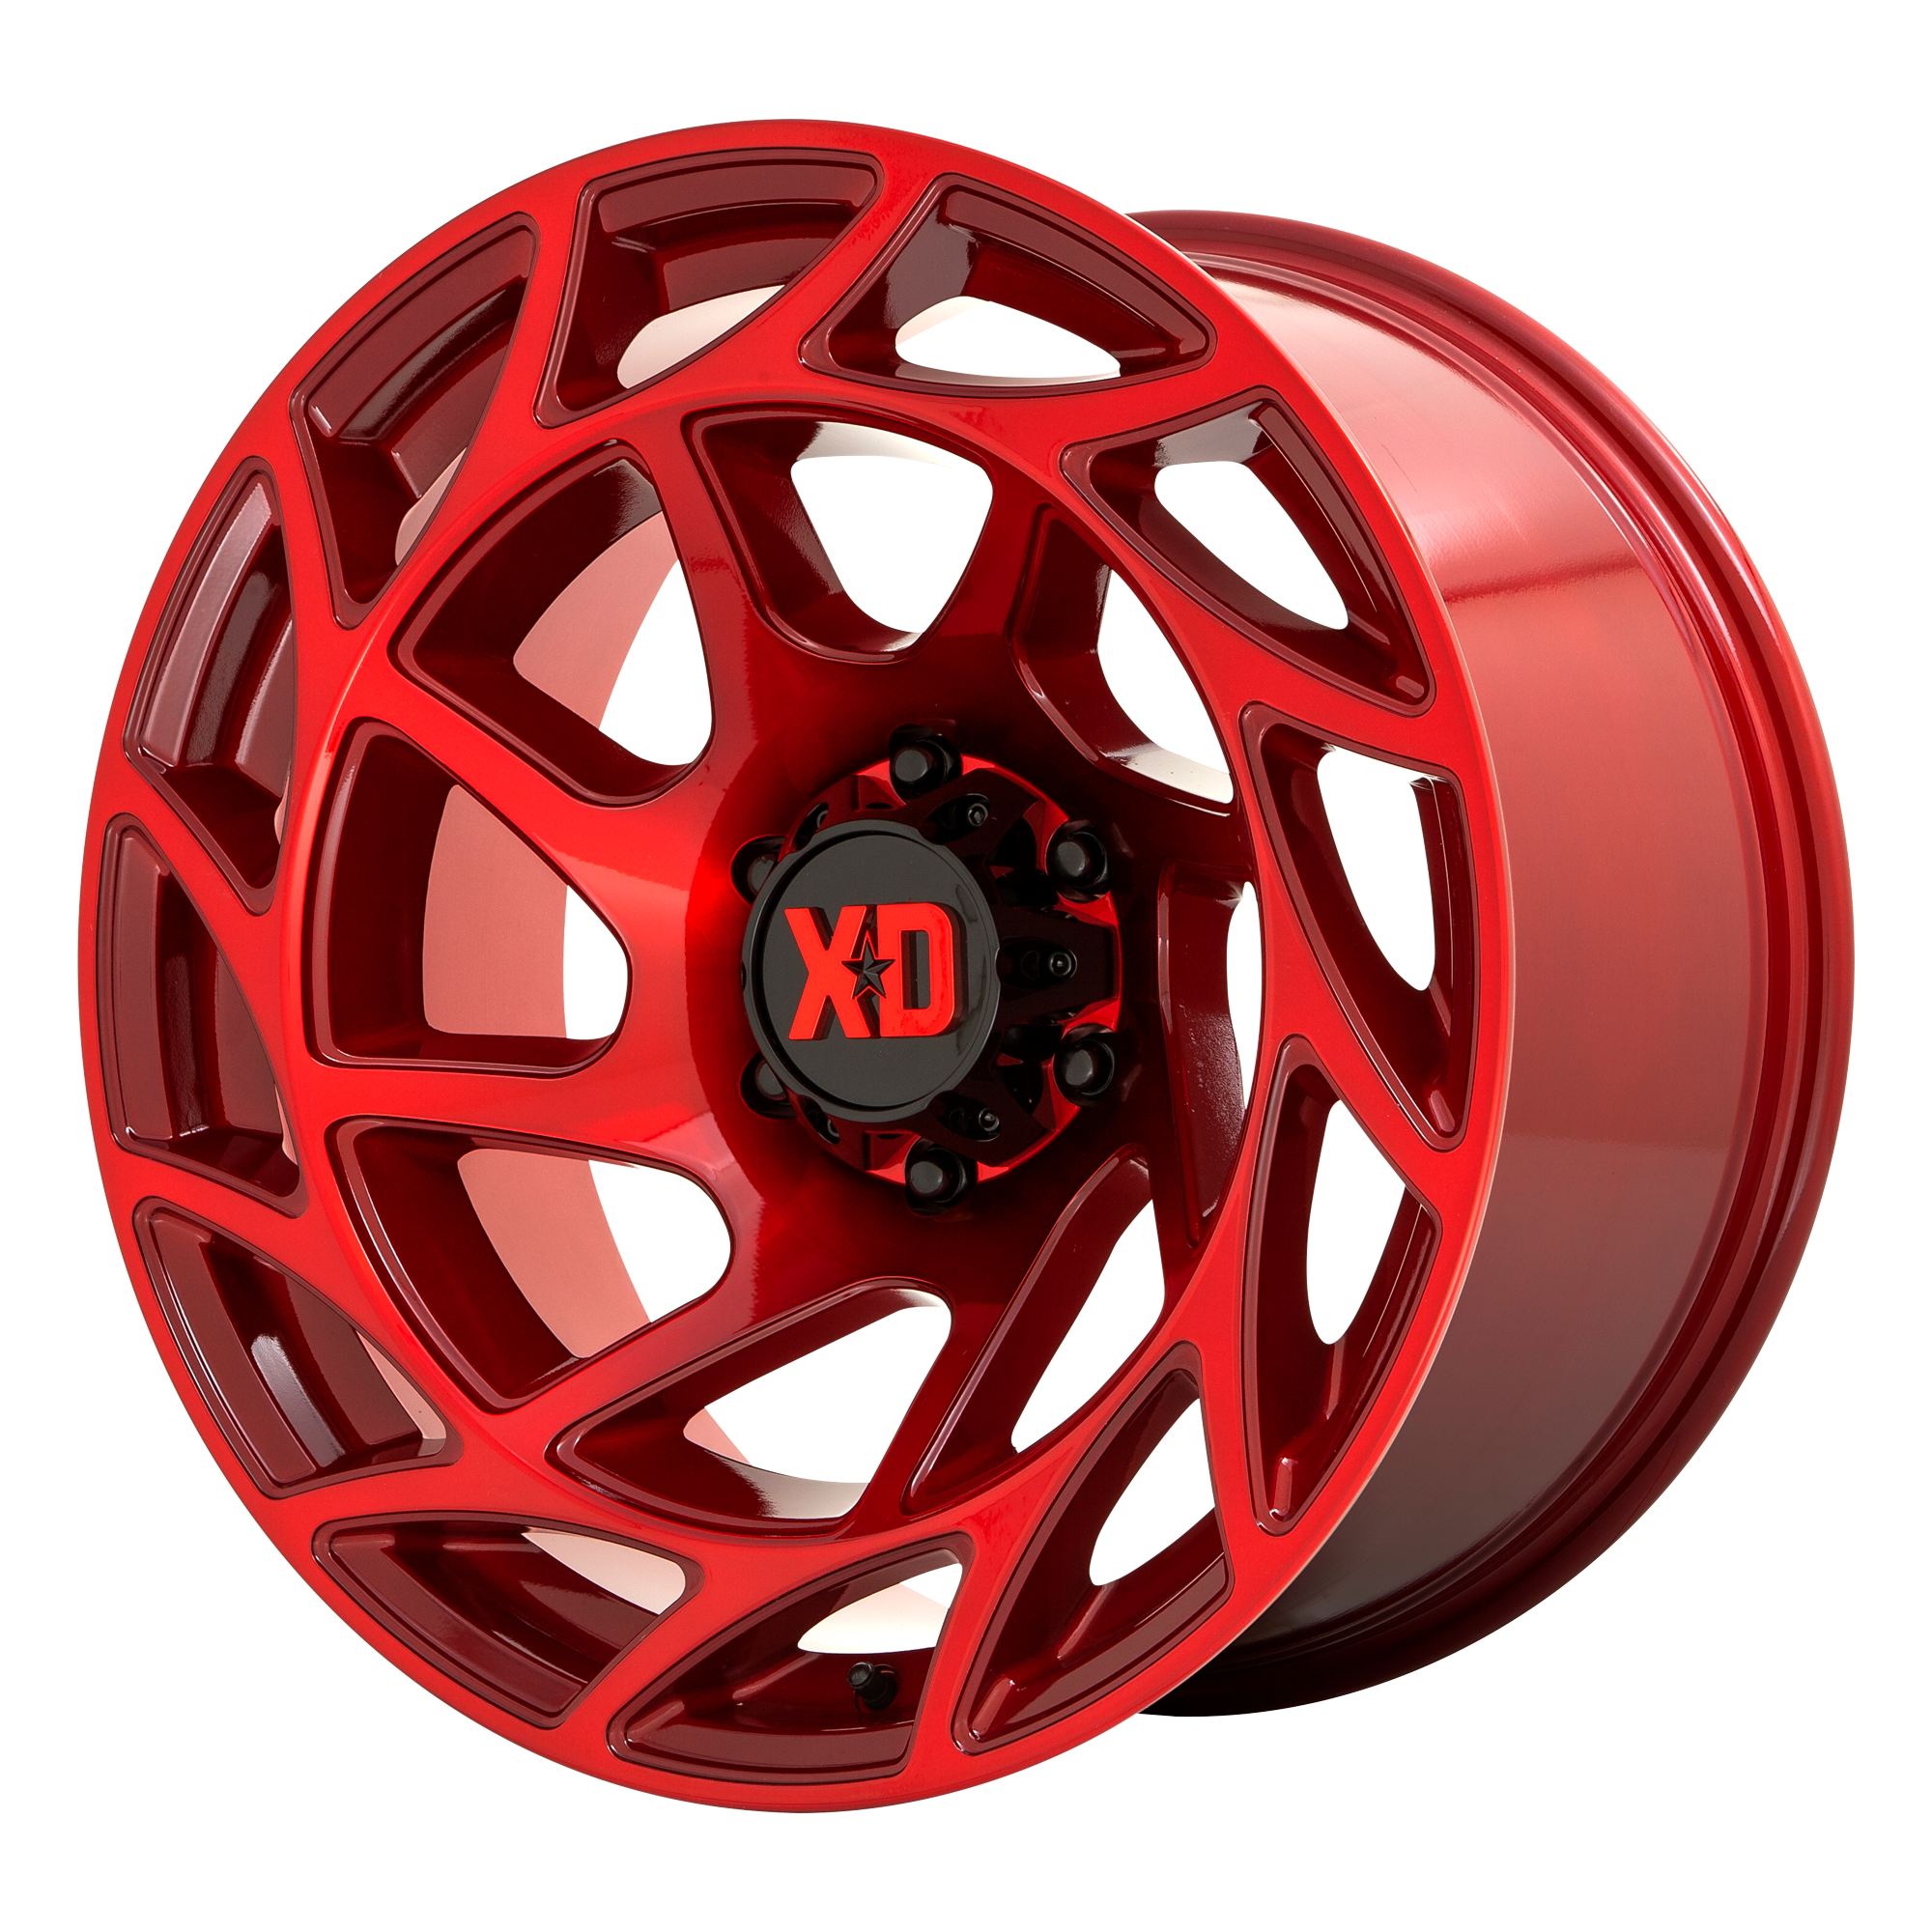 XD 20"x9" Non-Chrome Candy Red Custom Wheel ARSWCWXD86029087900